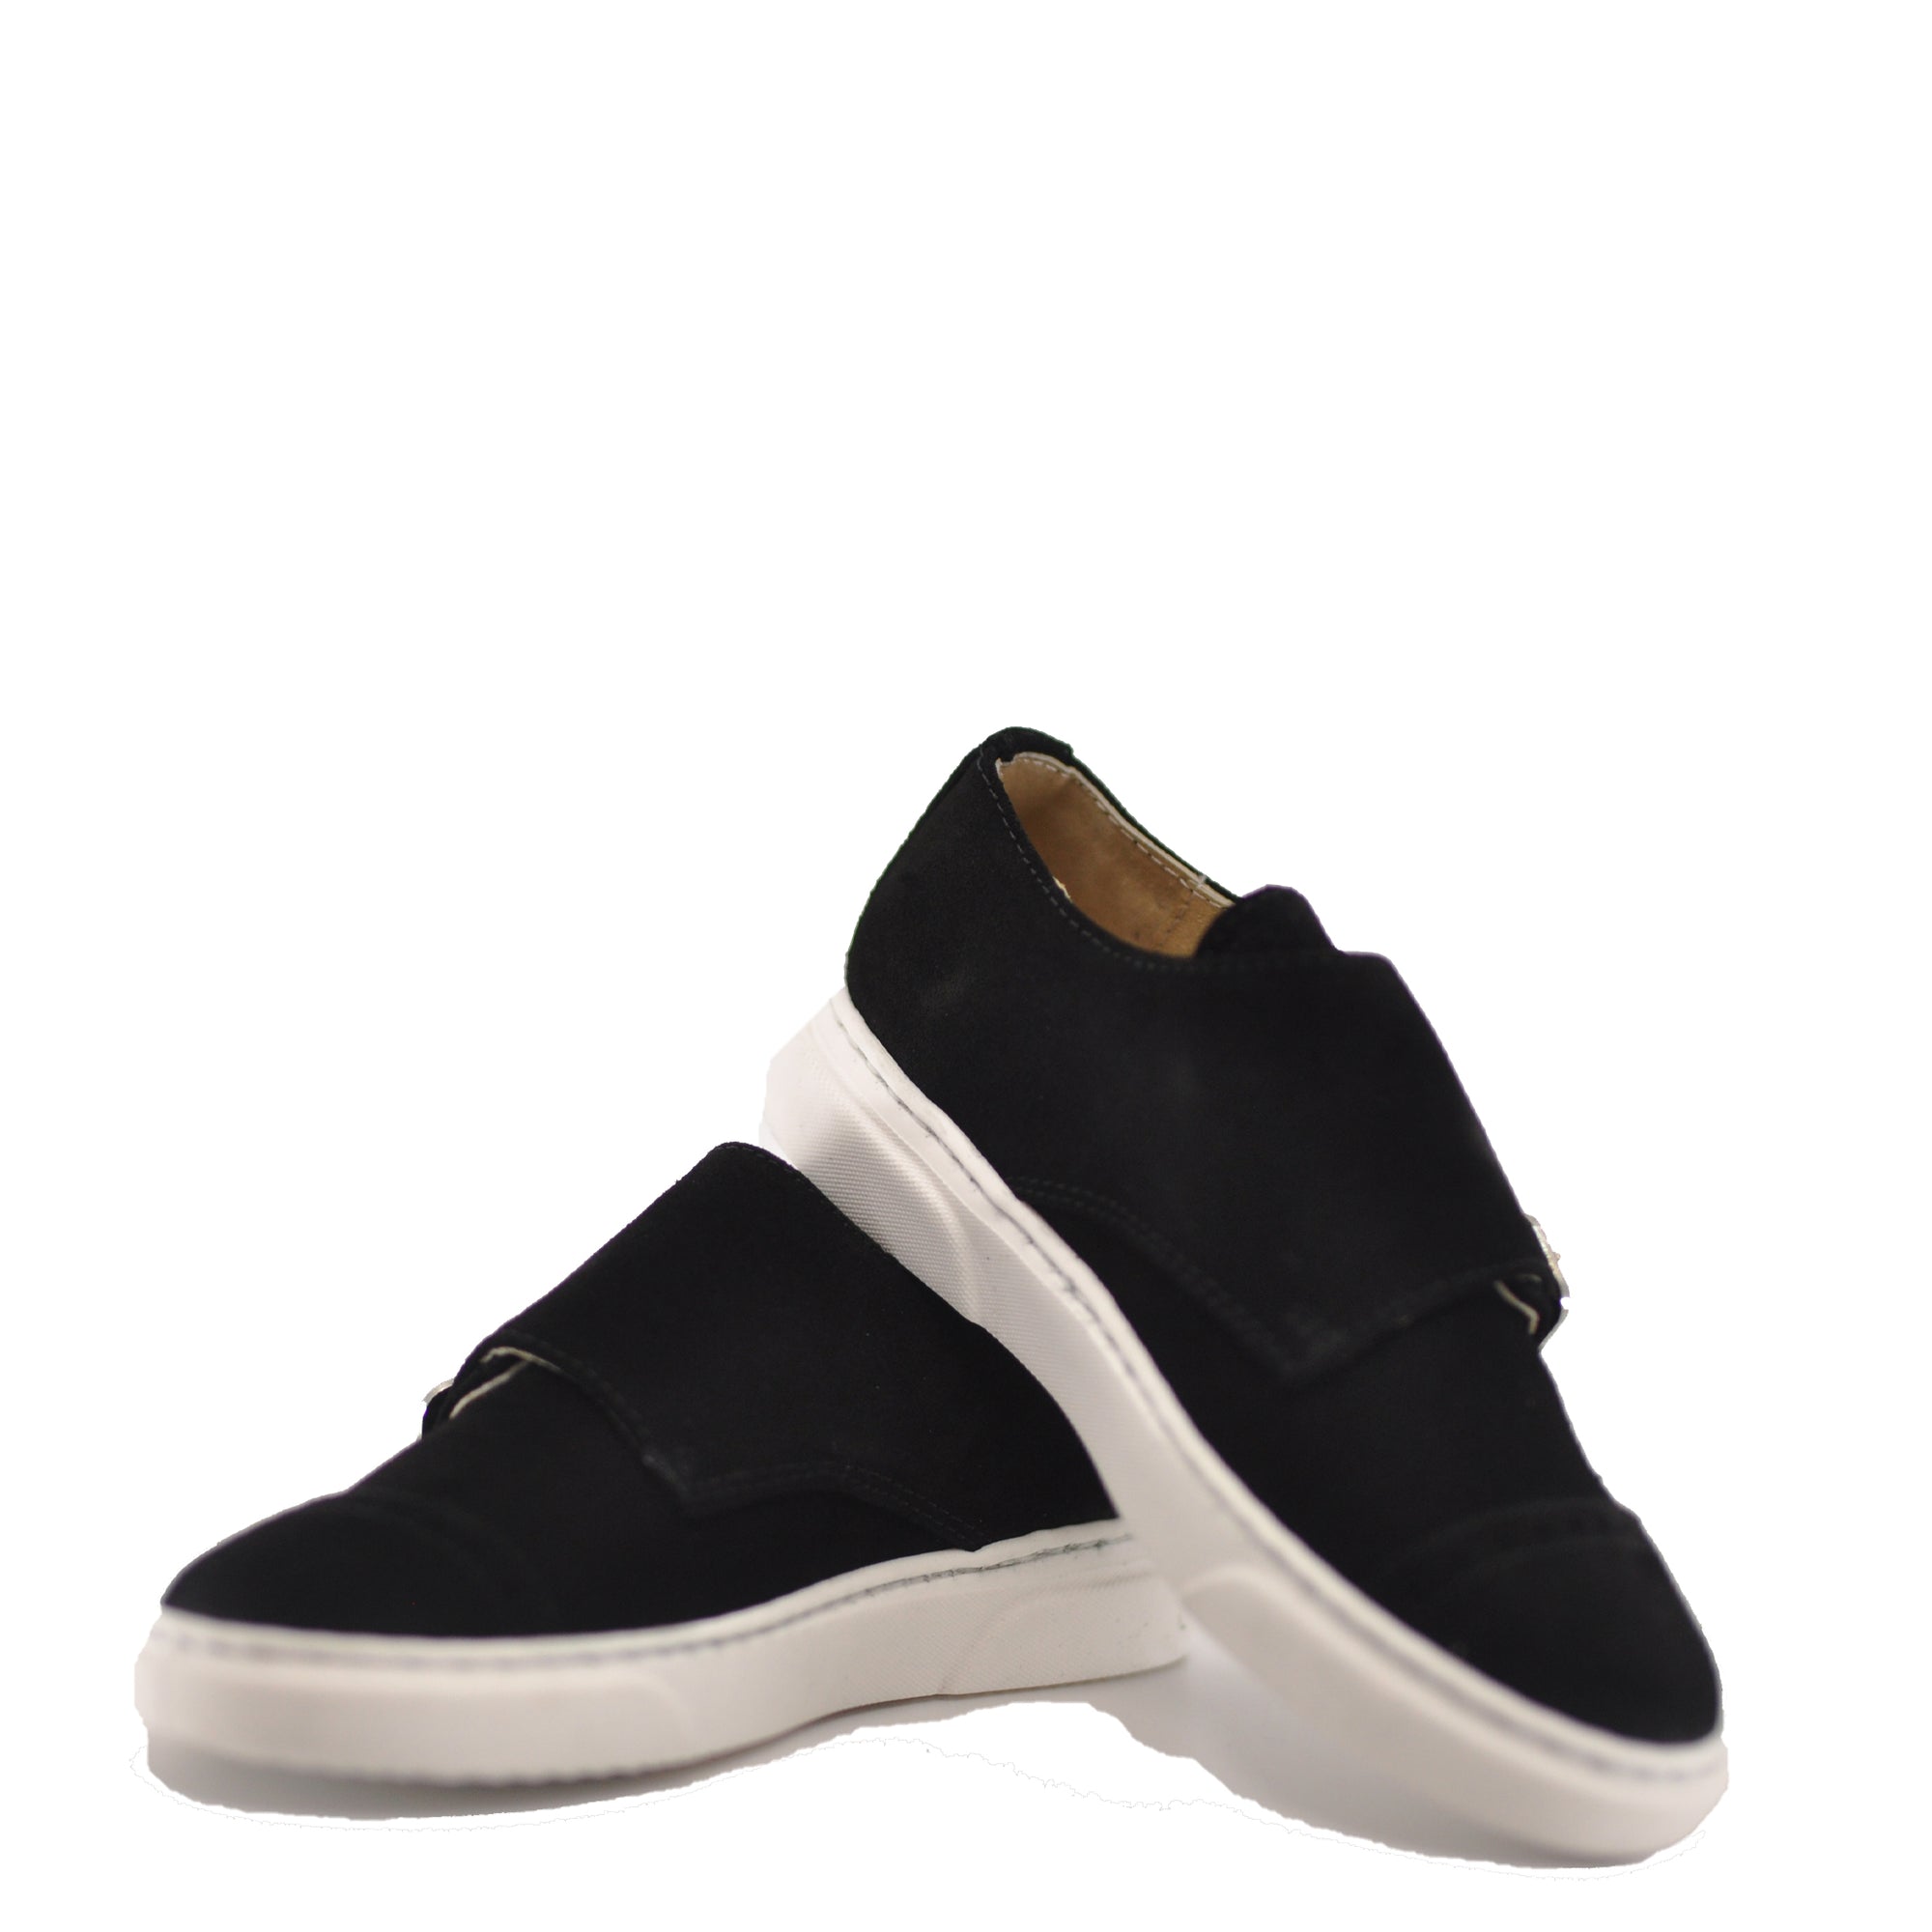 Blublonc Black Suede Double Monk Dress Sneaker-Tassel Children Shoes